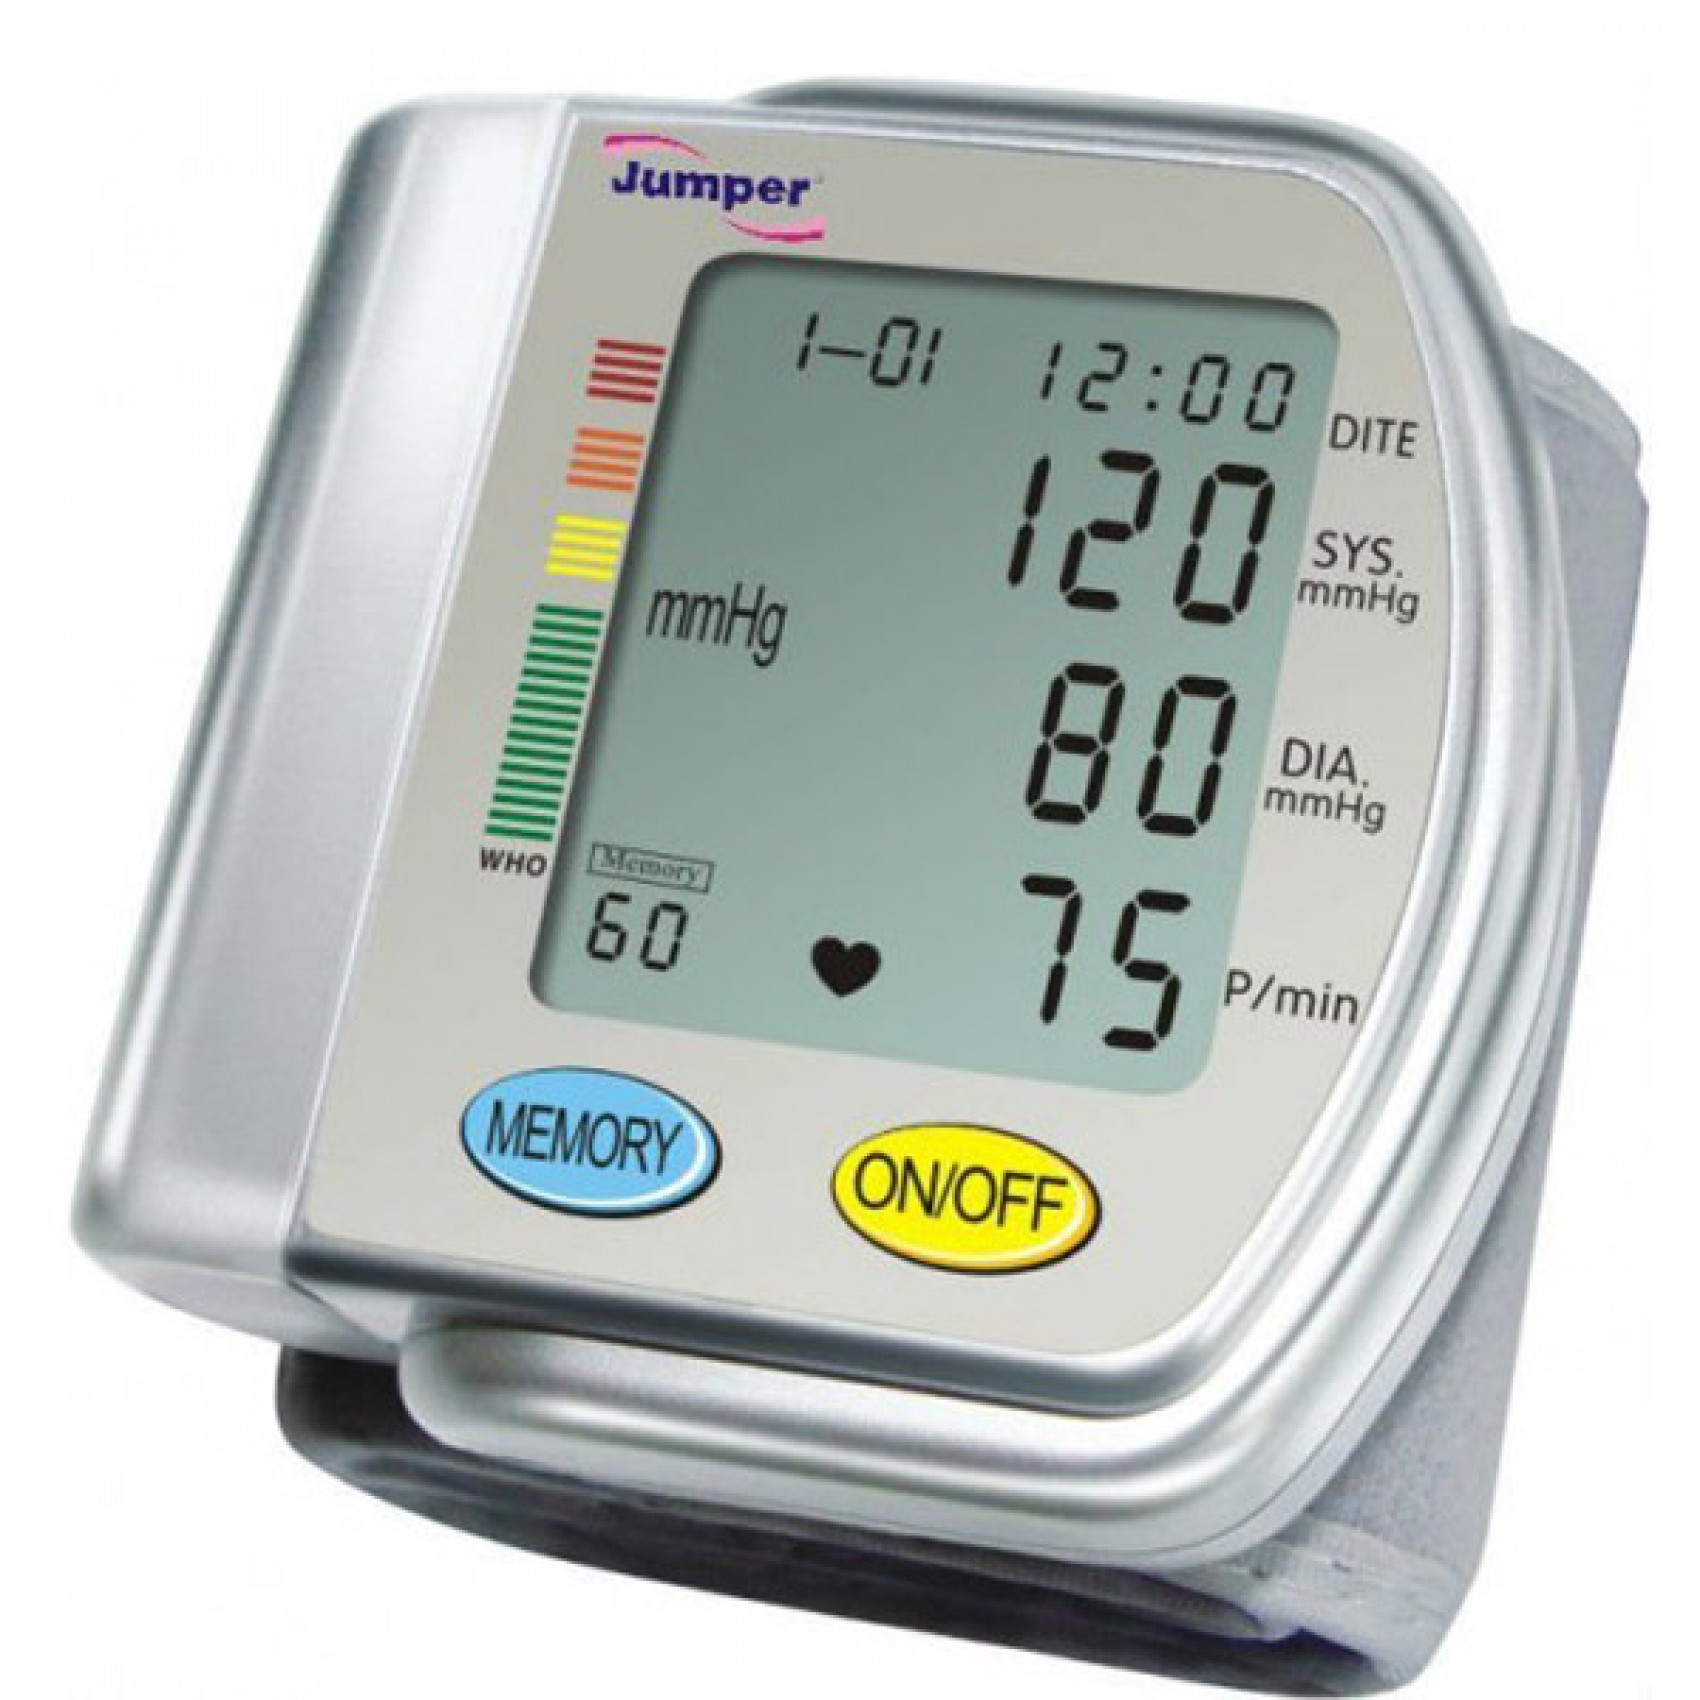 http://www.health-ace.com/wp-content/uploads/2016/09/Jumper-Wrist-Blood-Pressure-Monitor.jpg